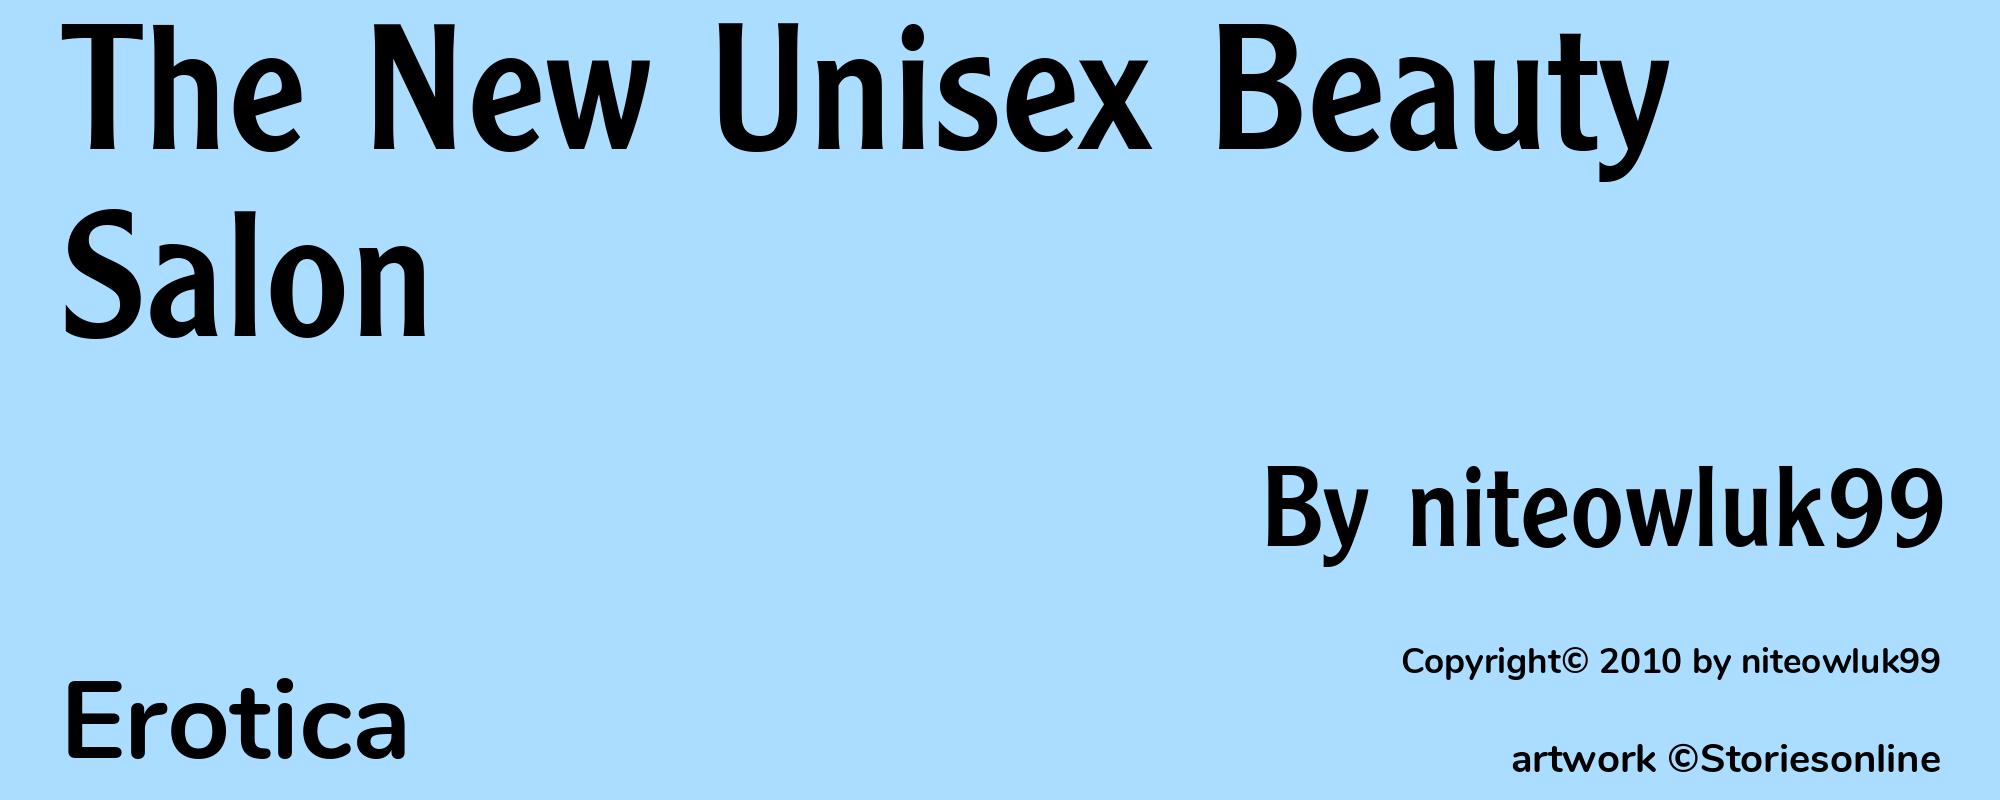 The New Unisex Beauty Salon - Cover